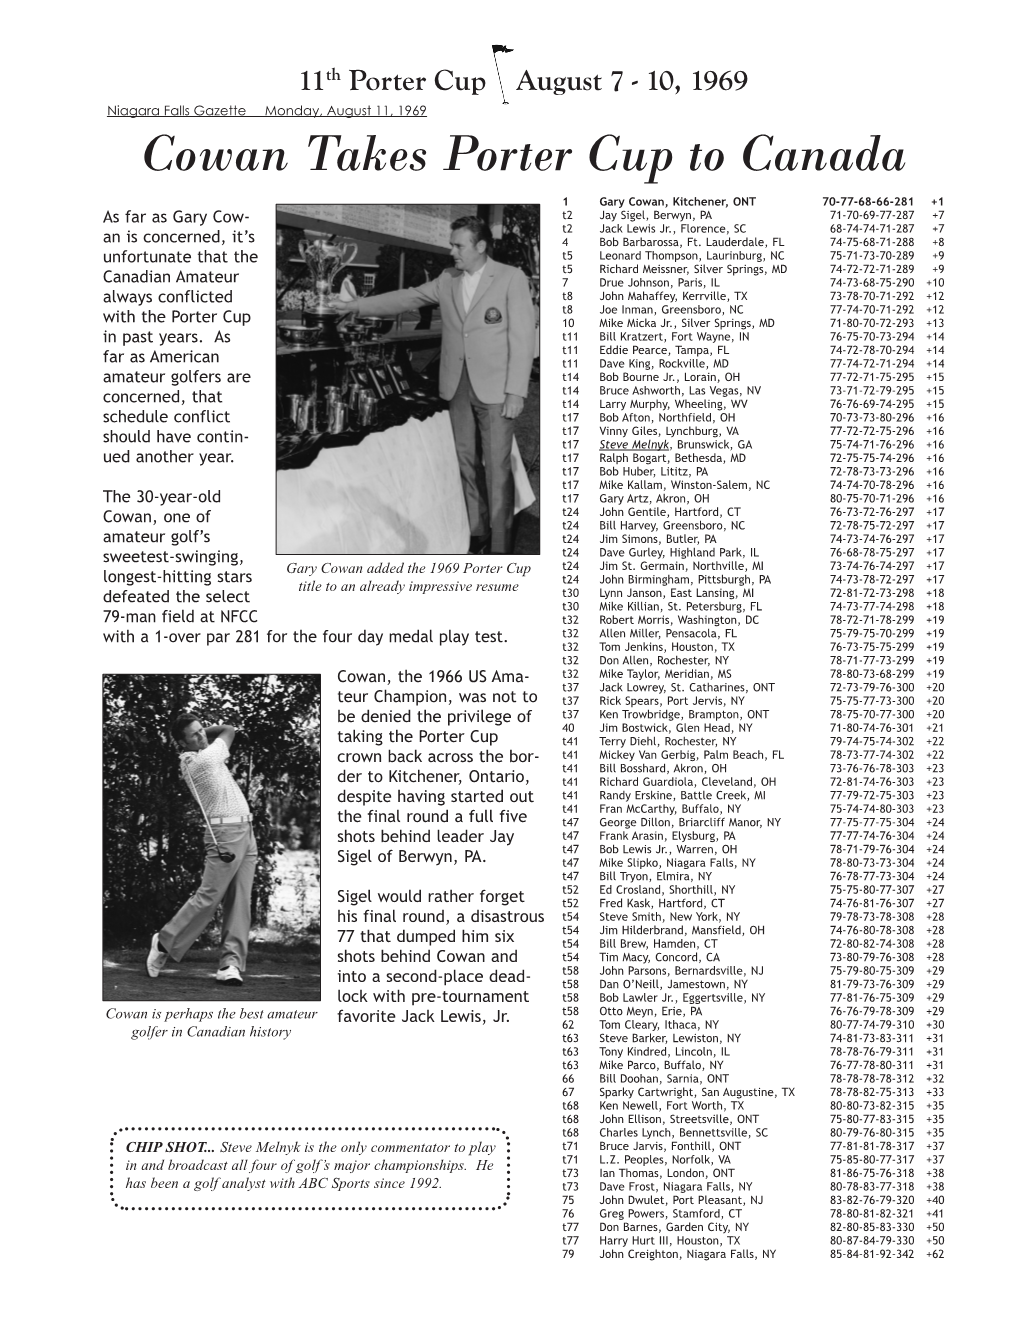 1969 Niagara Falls Gazette Monday, August 11, 1969 Cowan Takes Porter Cup to Canada